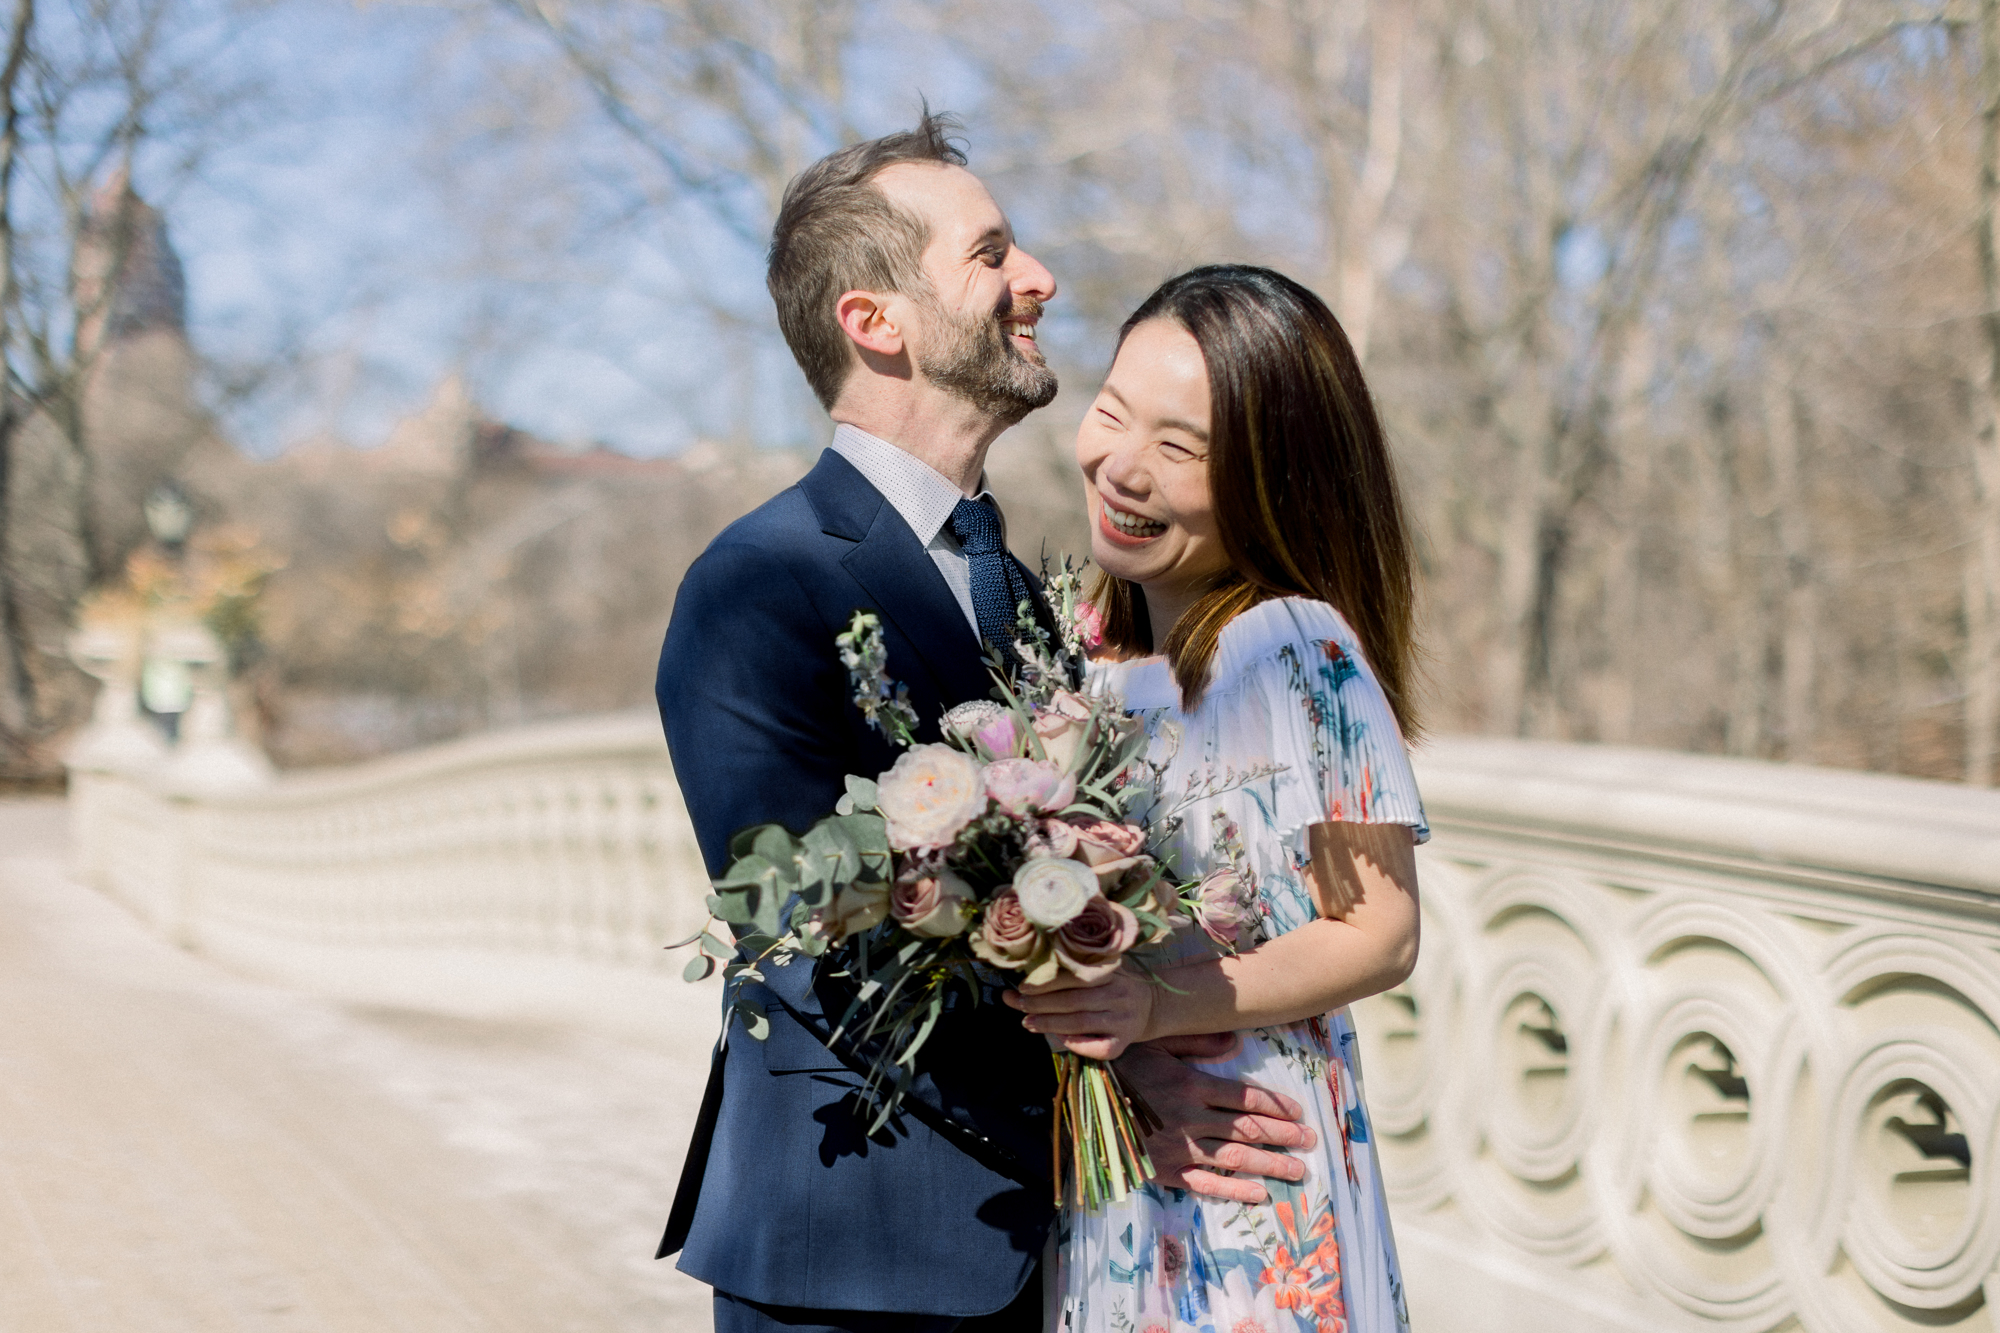 Magical Central Park Wedding Photos in Wintery New York